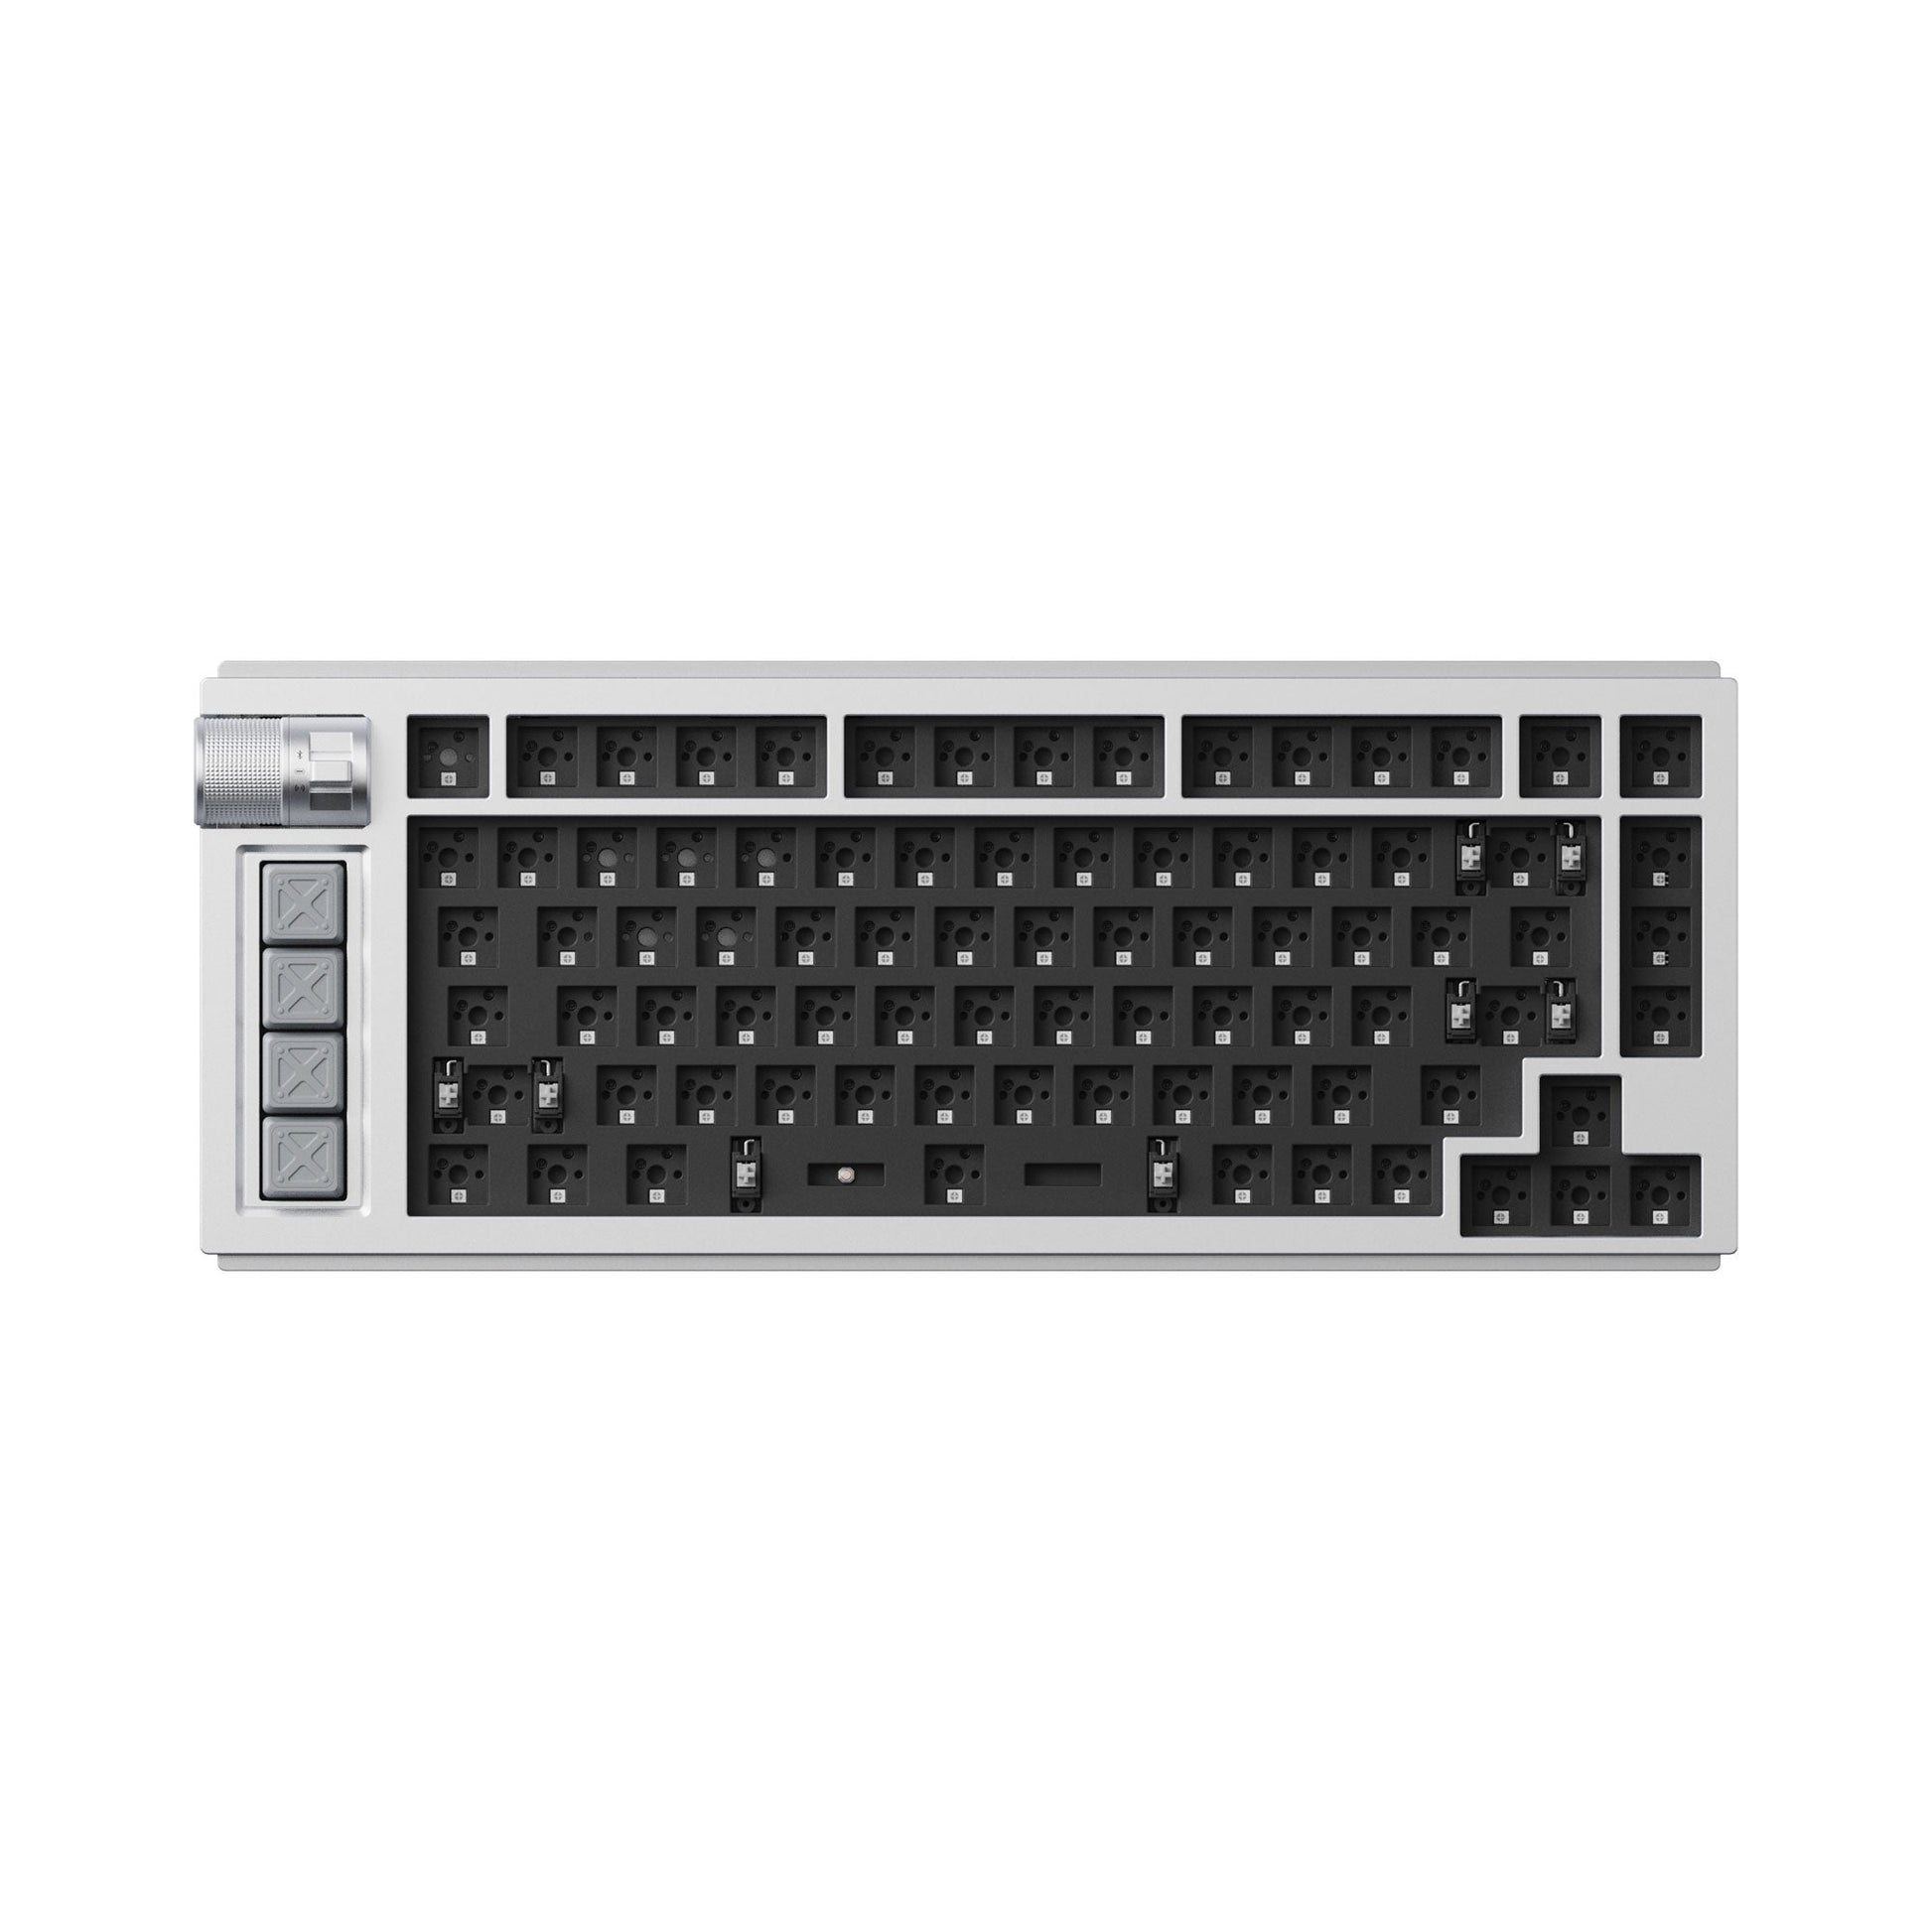 Lemokey L1 QMK VIA Wireless Custom Gaming Keyboard 75% Layout Aluminum Space Silver Barebone for Windows Mac Linux